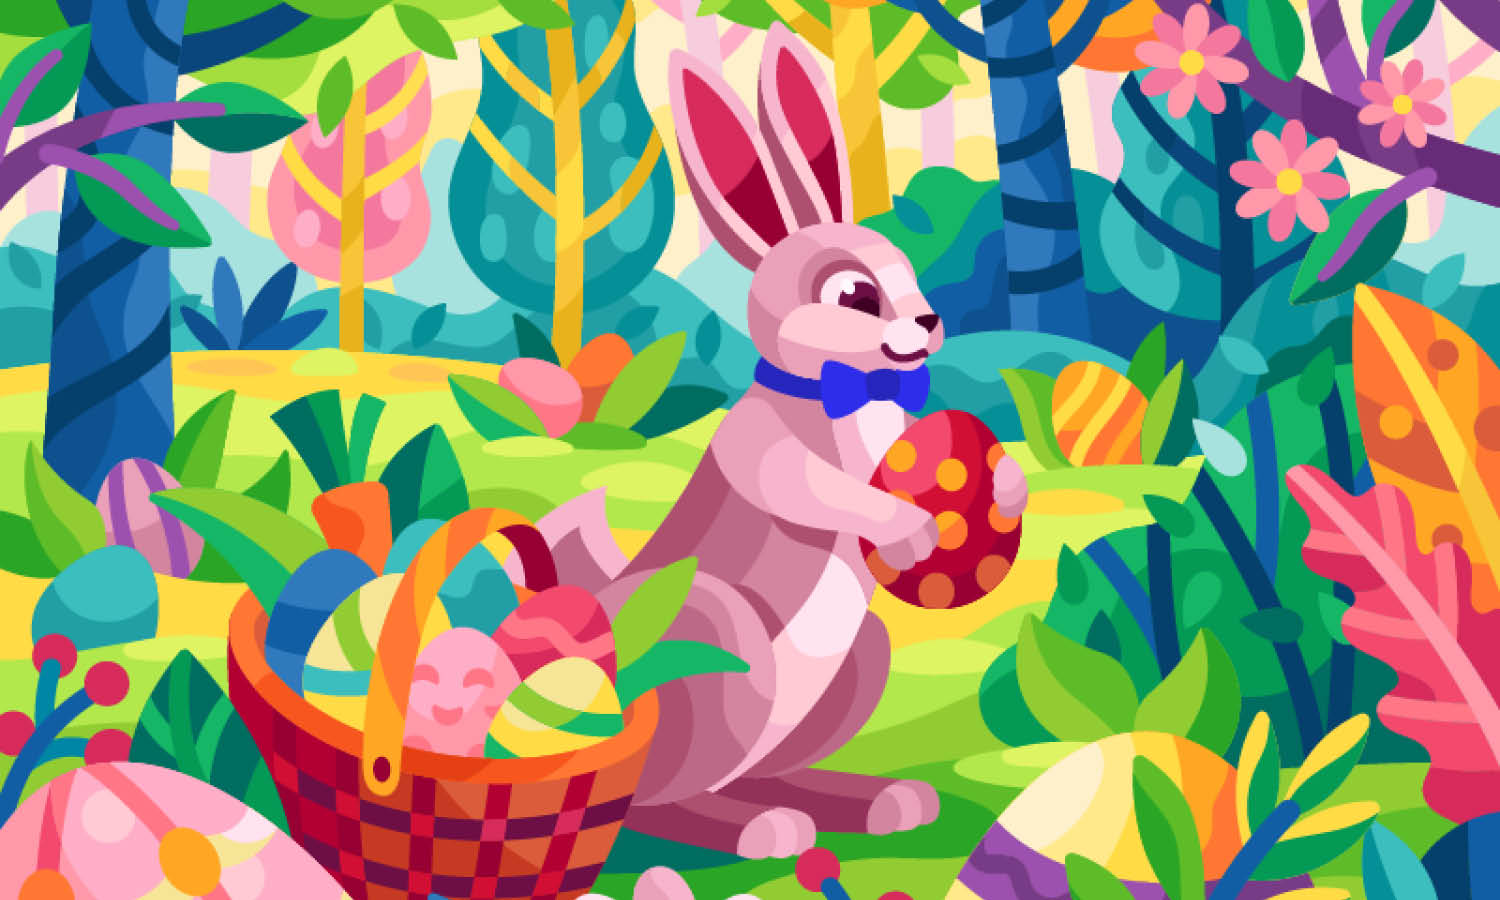 30 Best Easter Illustration Ideas You Should Check